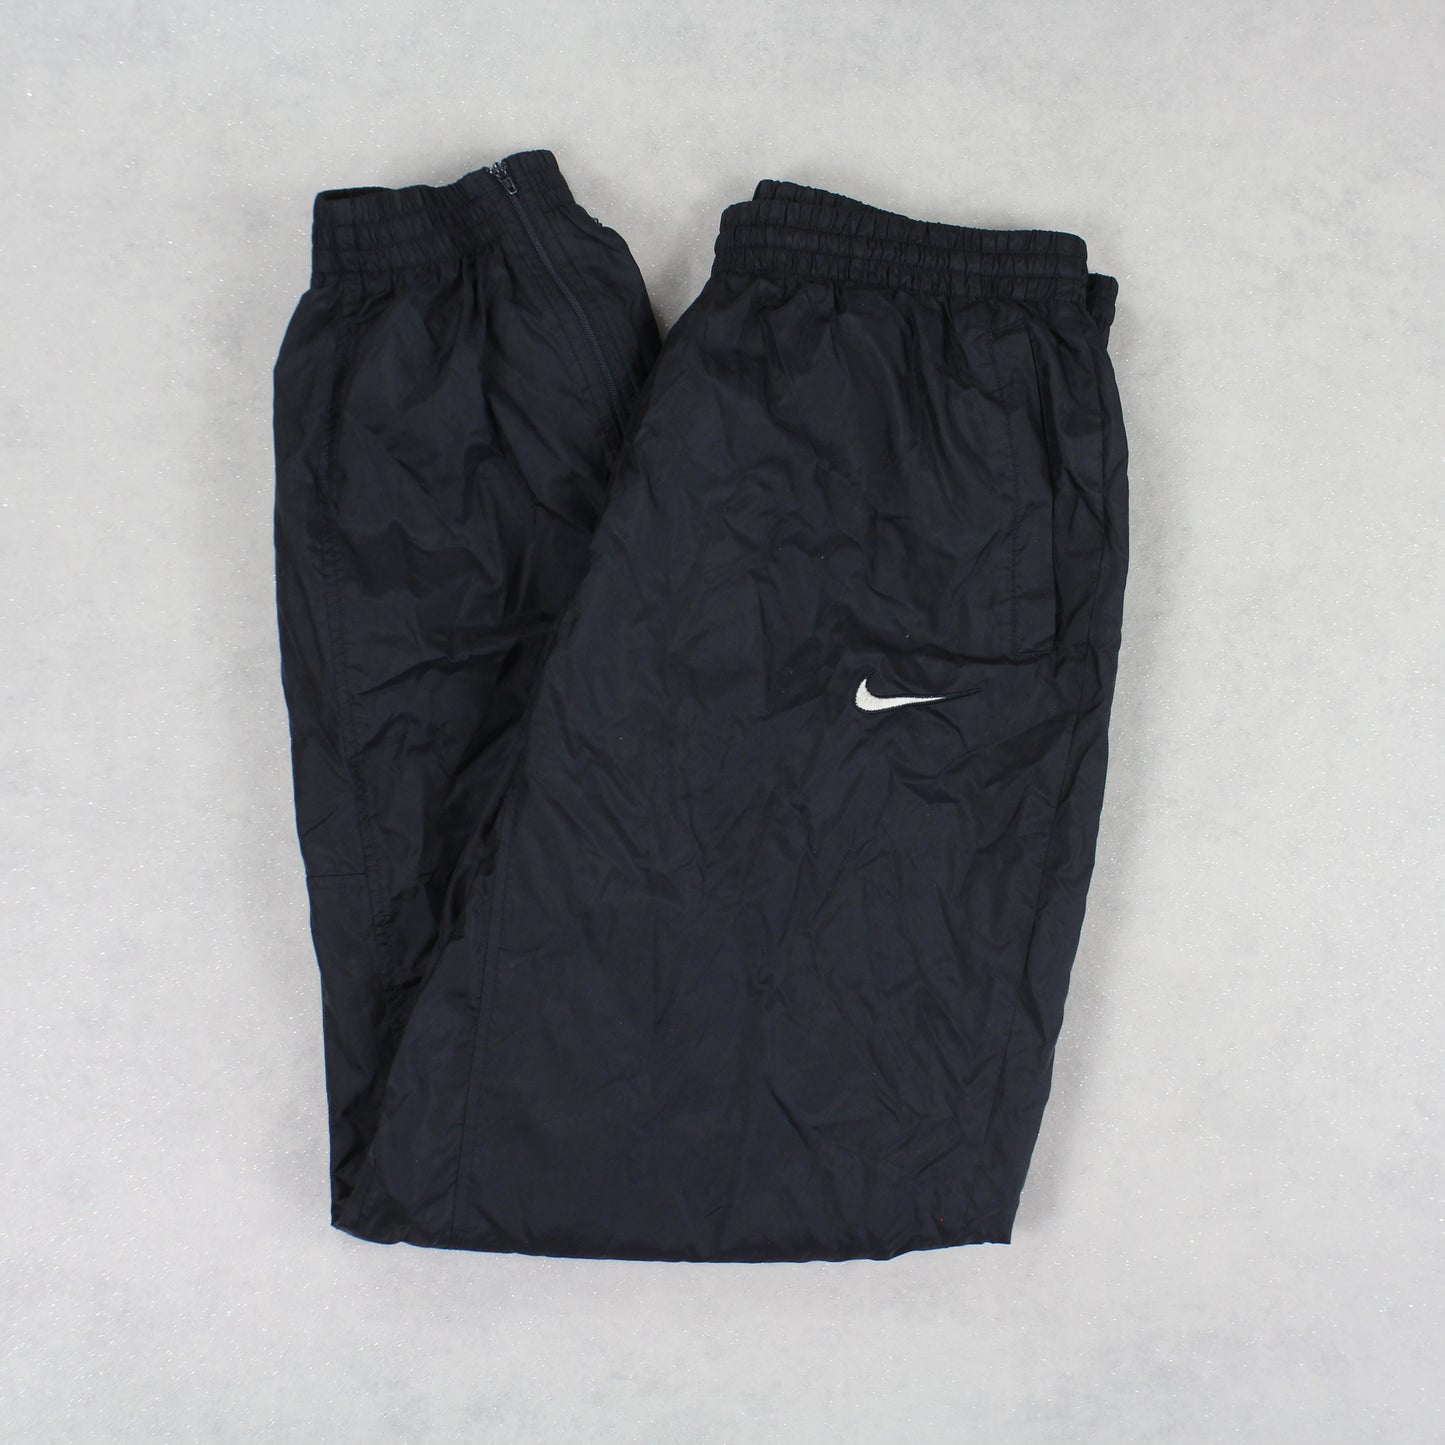 RARE Vintage 90s Nike Trackpants Black - (M)